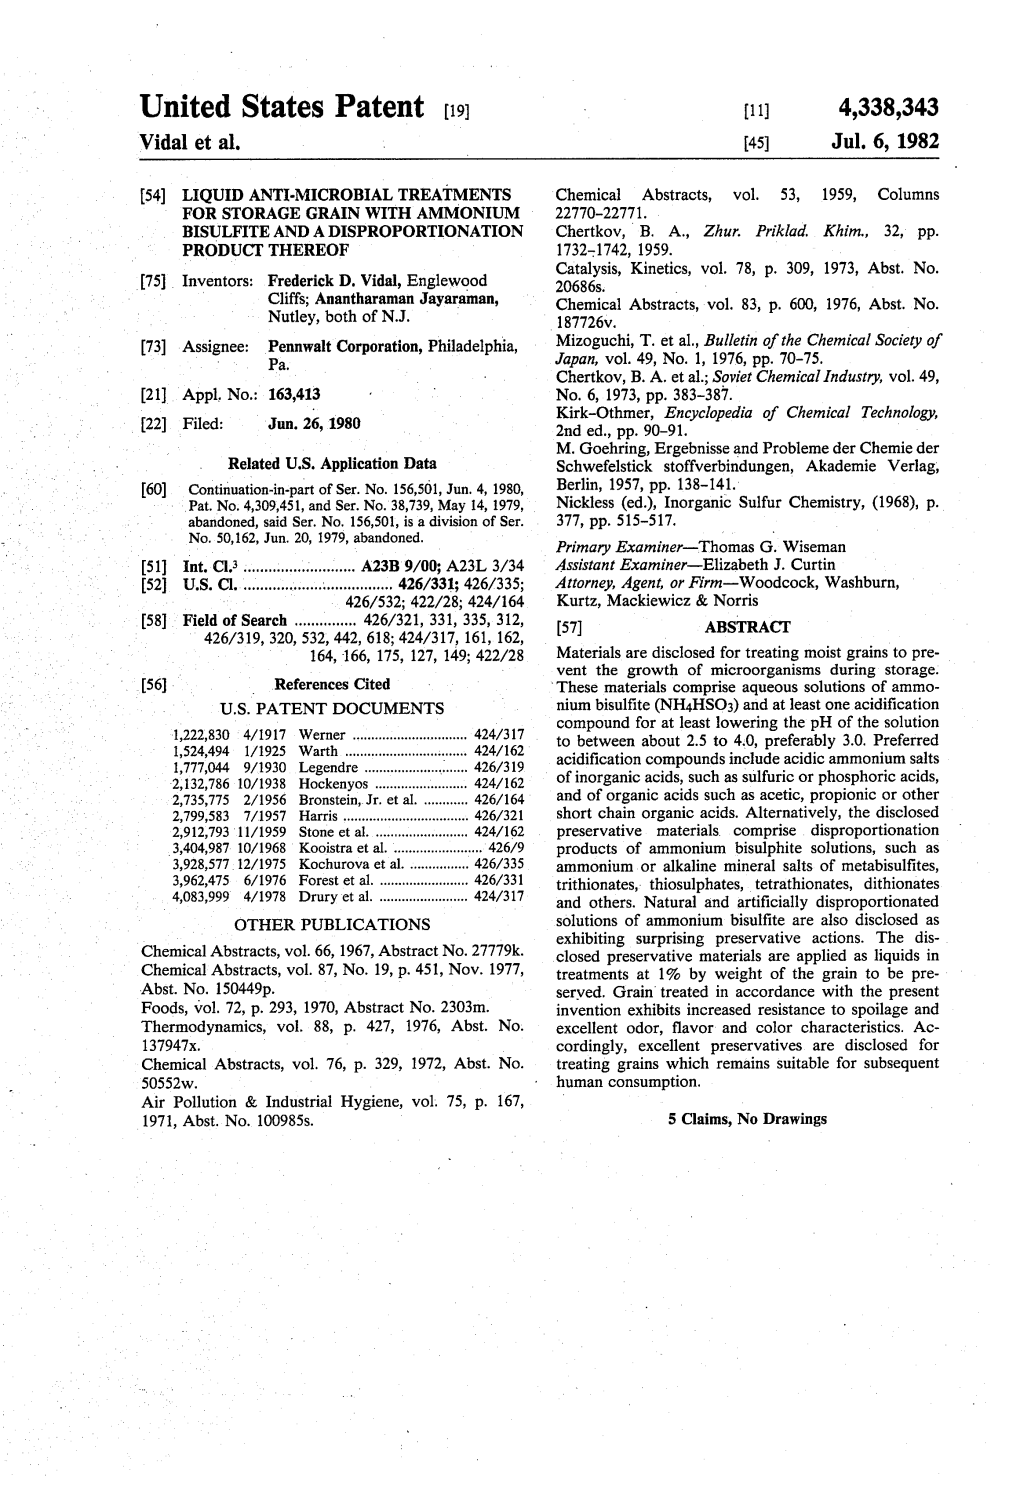 United States Patent (19) 11) 4,338,343 Vidal Et Al